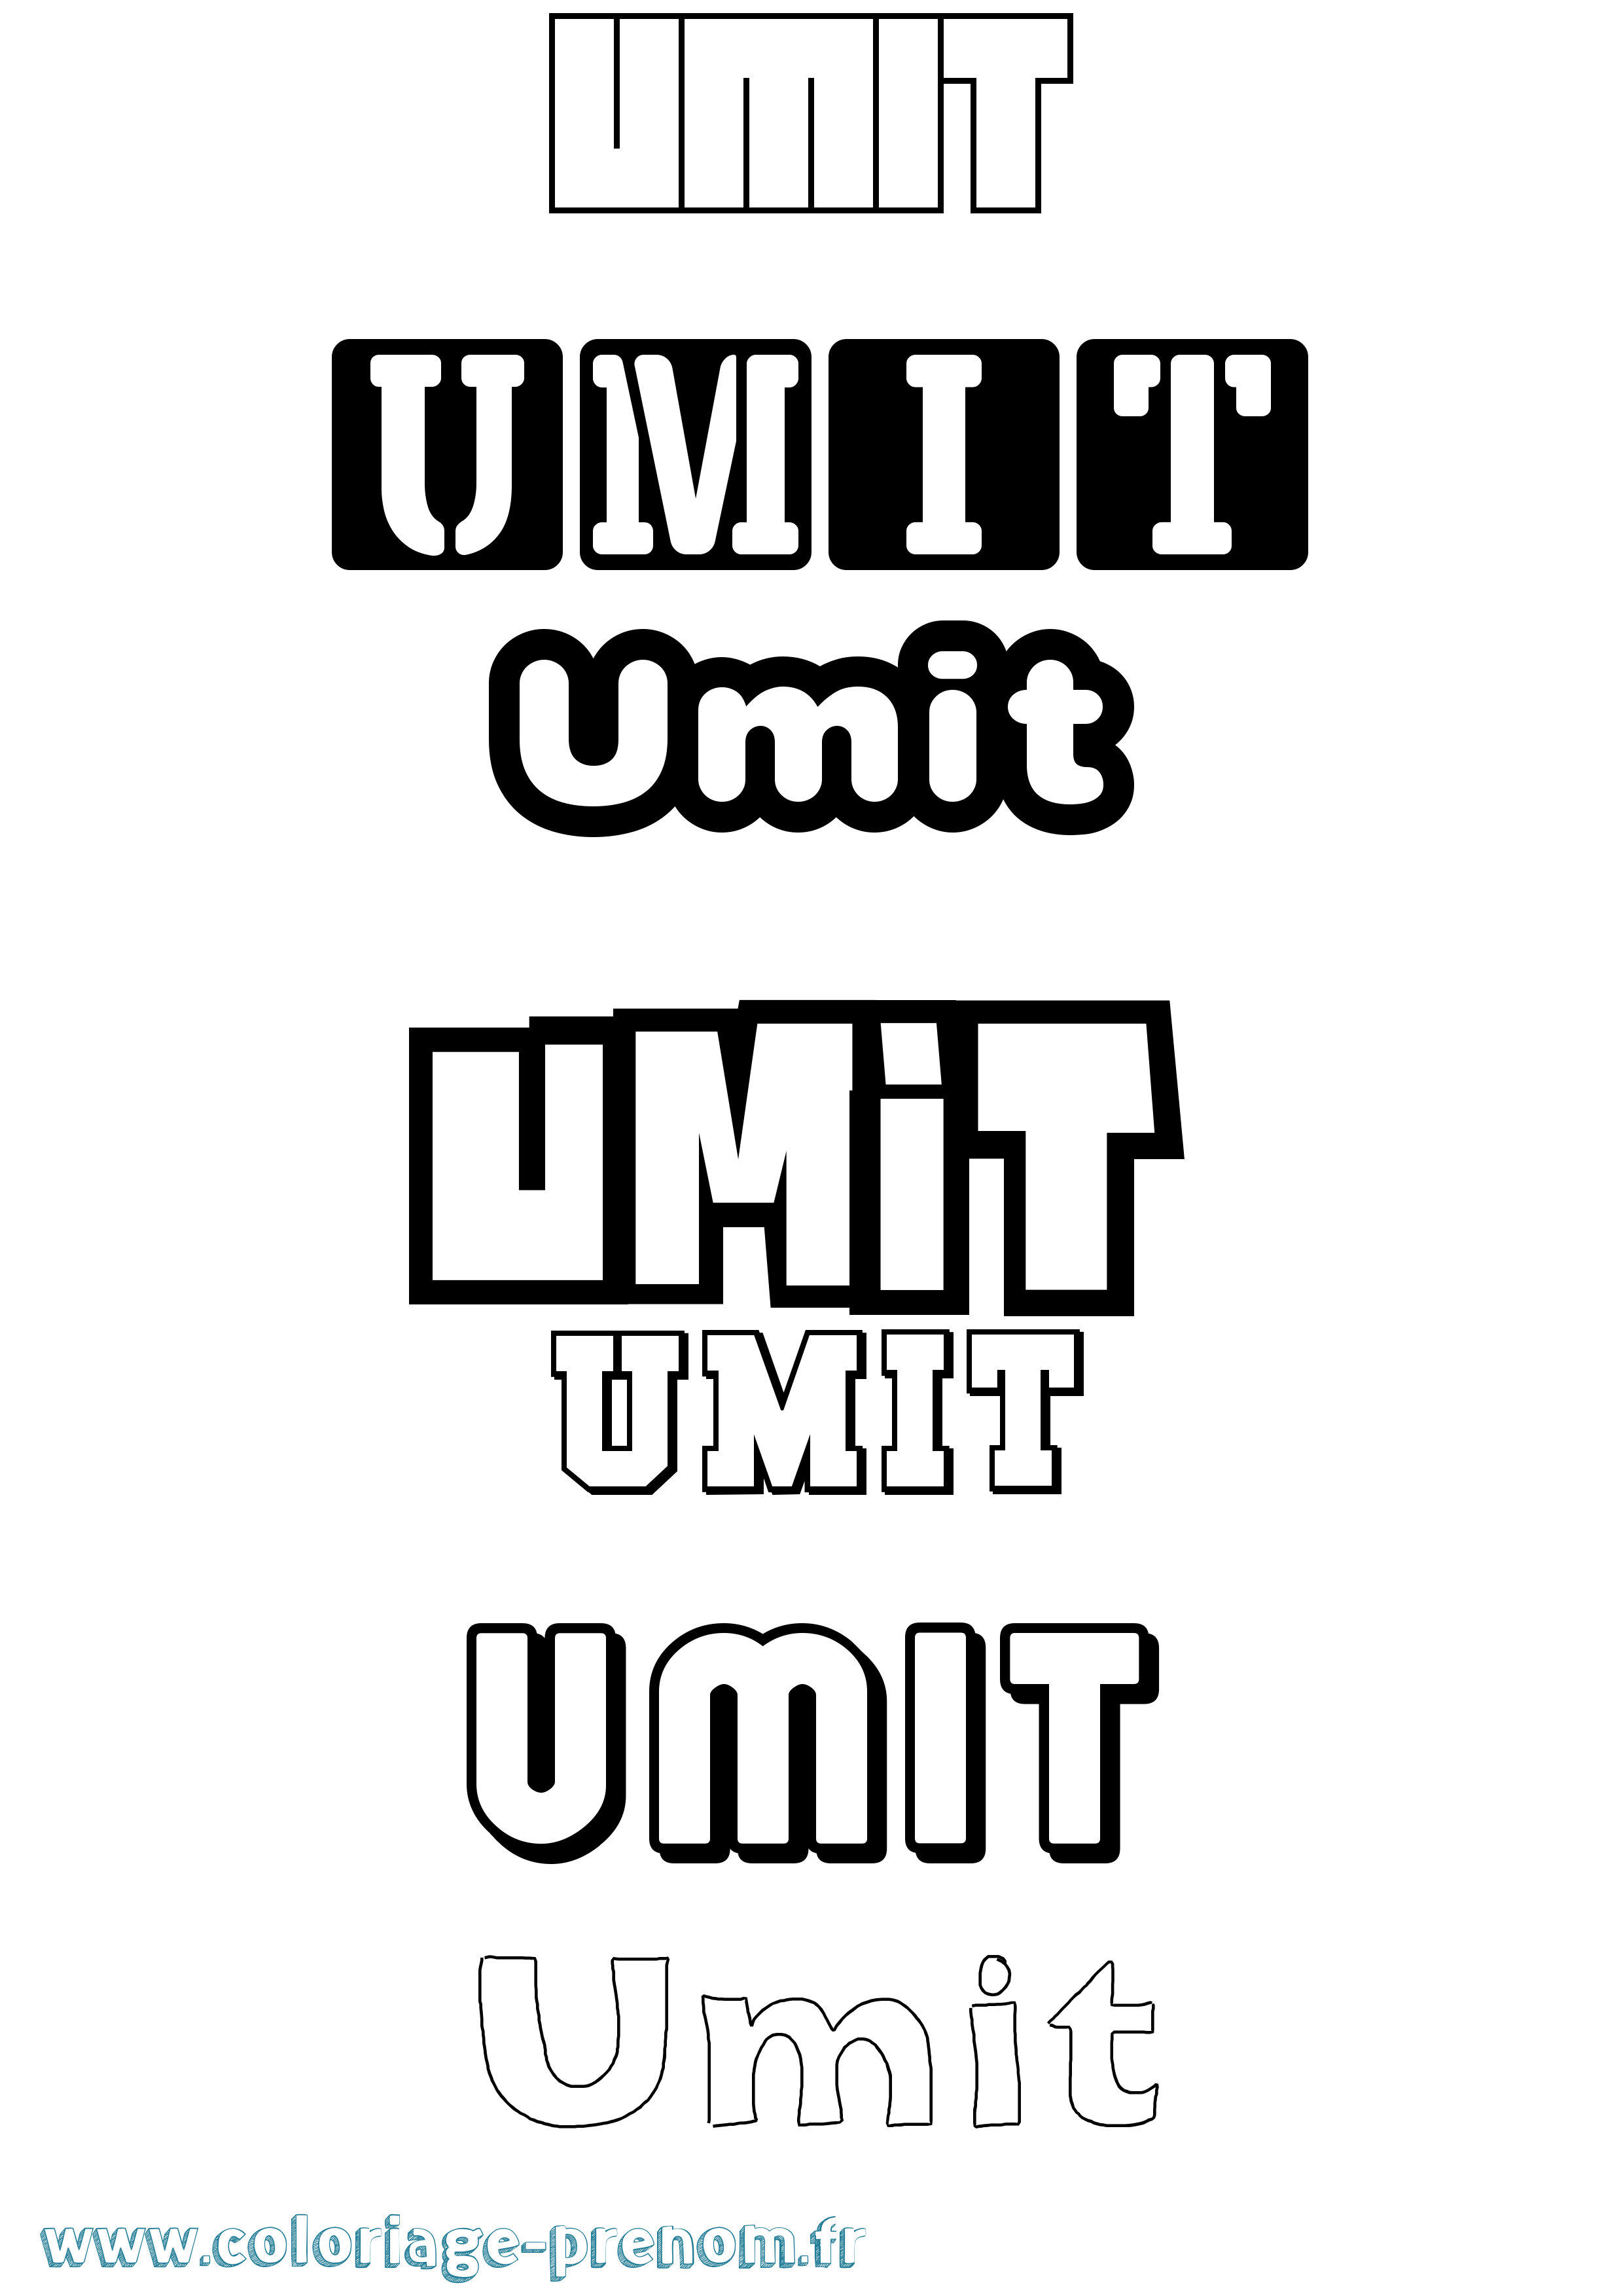 Coloriage prénom Umit Simple